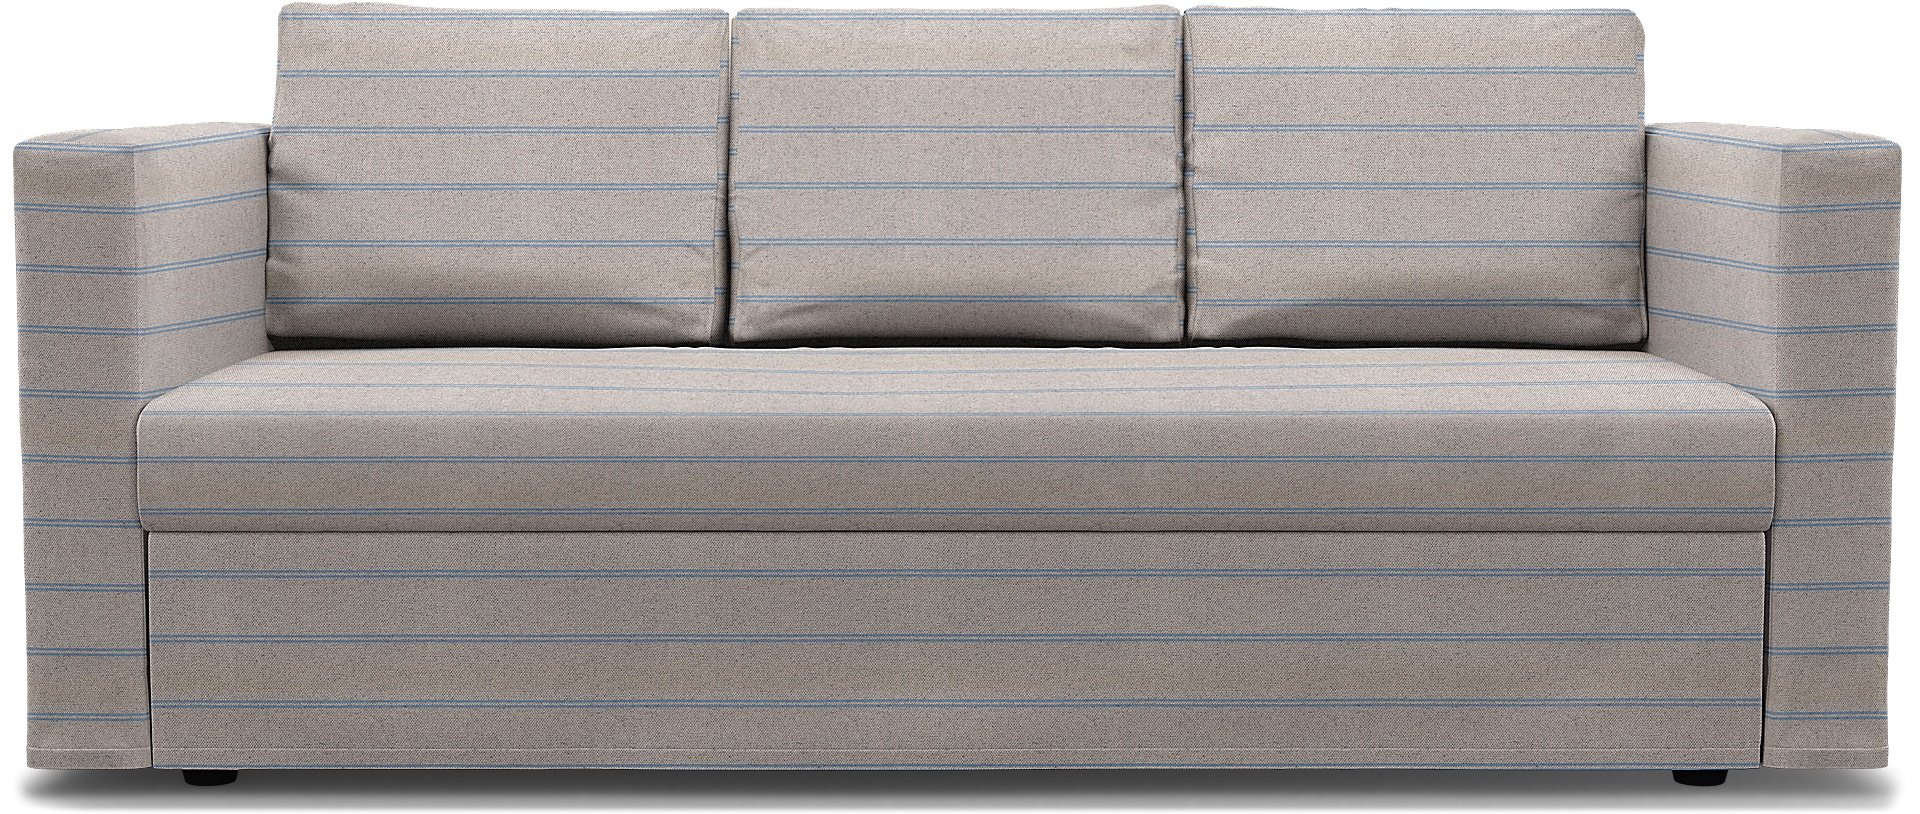 IKEA - Friheten 3 Seater Sofa Bed Cover, Blue Stripe, Cotton - Bemz